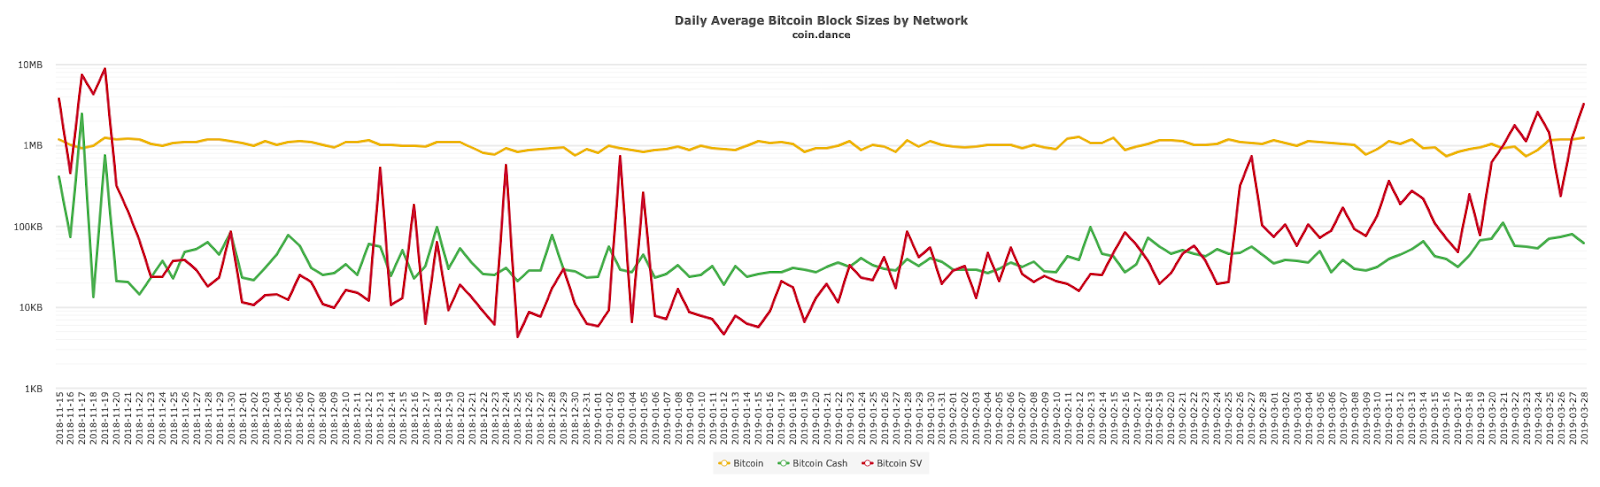 After Surpassing Bitcoincash Bitcoin Sv Average Block Size Is Now - 